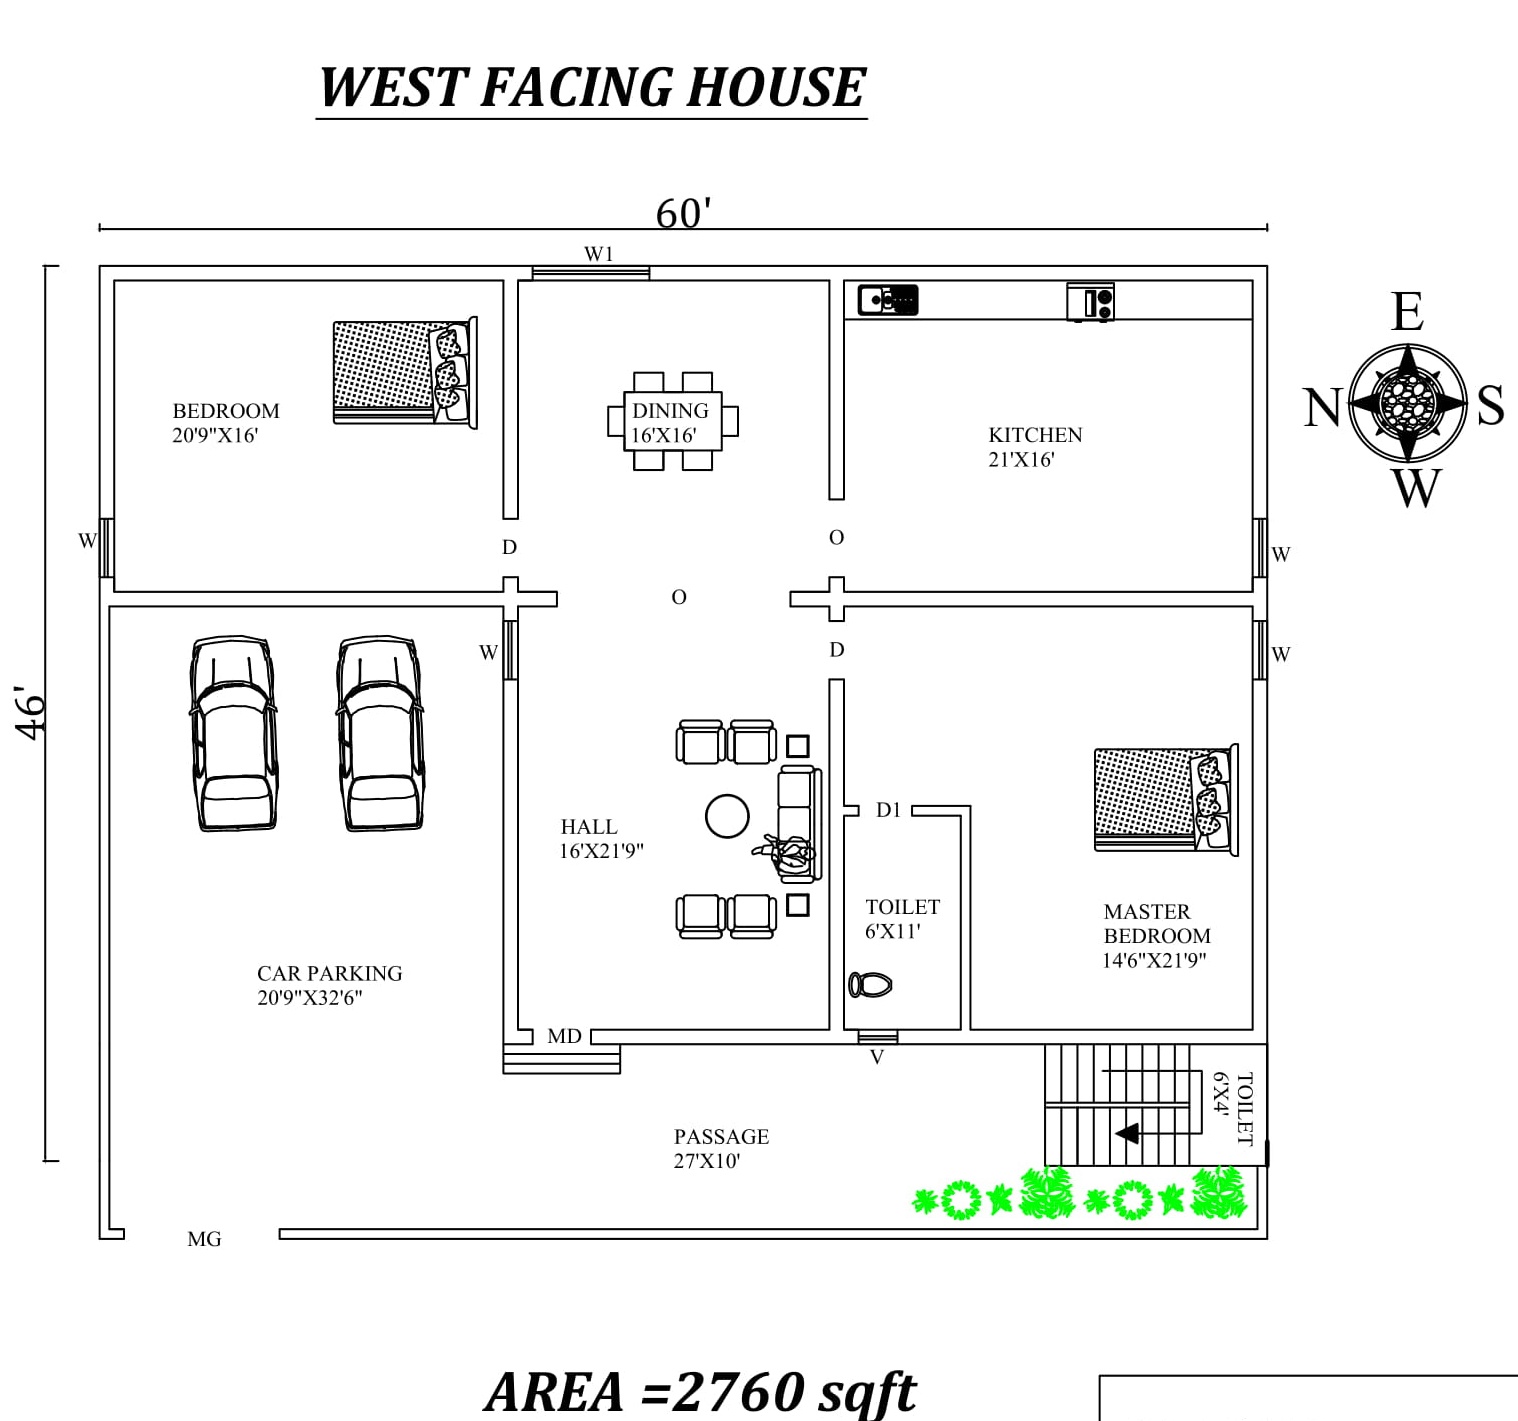 60 X46 west facing 2bhk house plan as per Vastu Shastra 